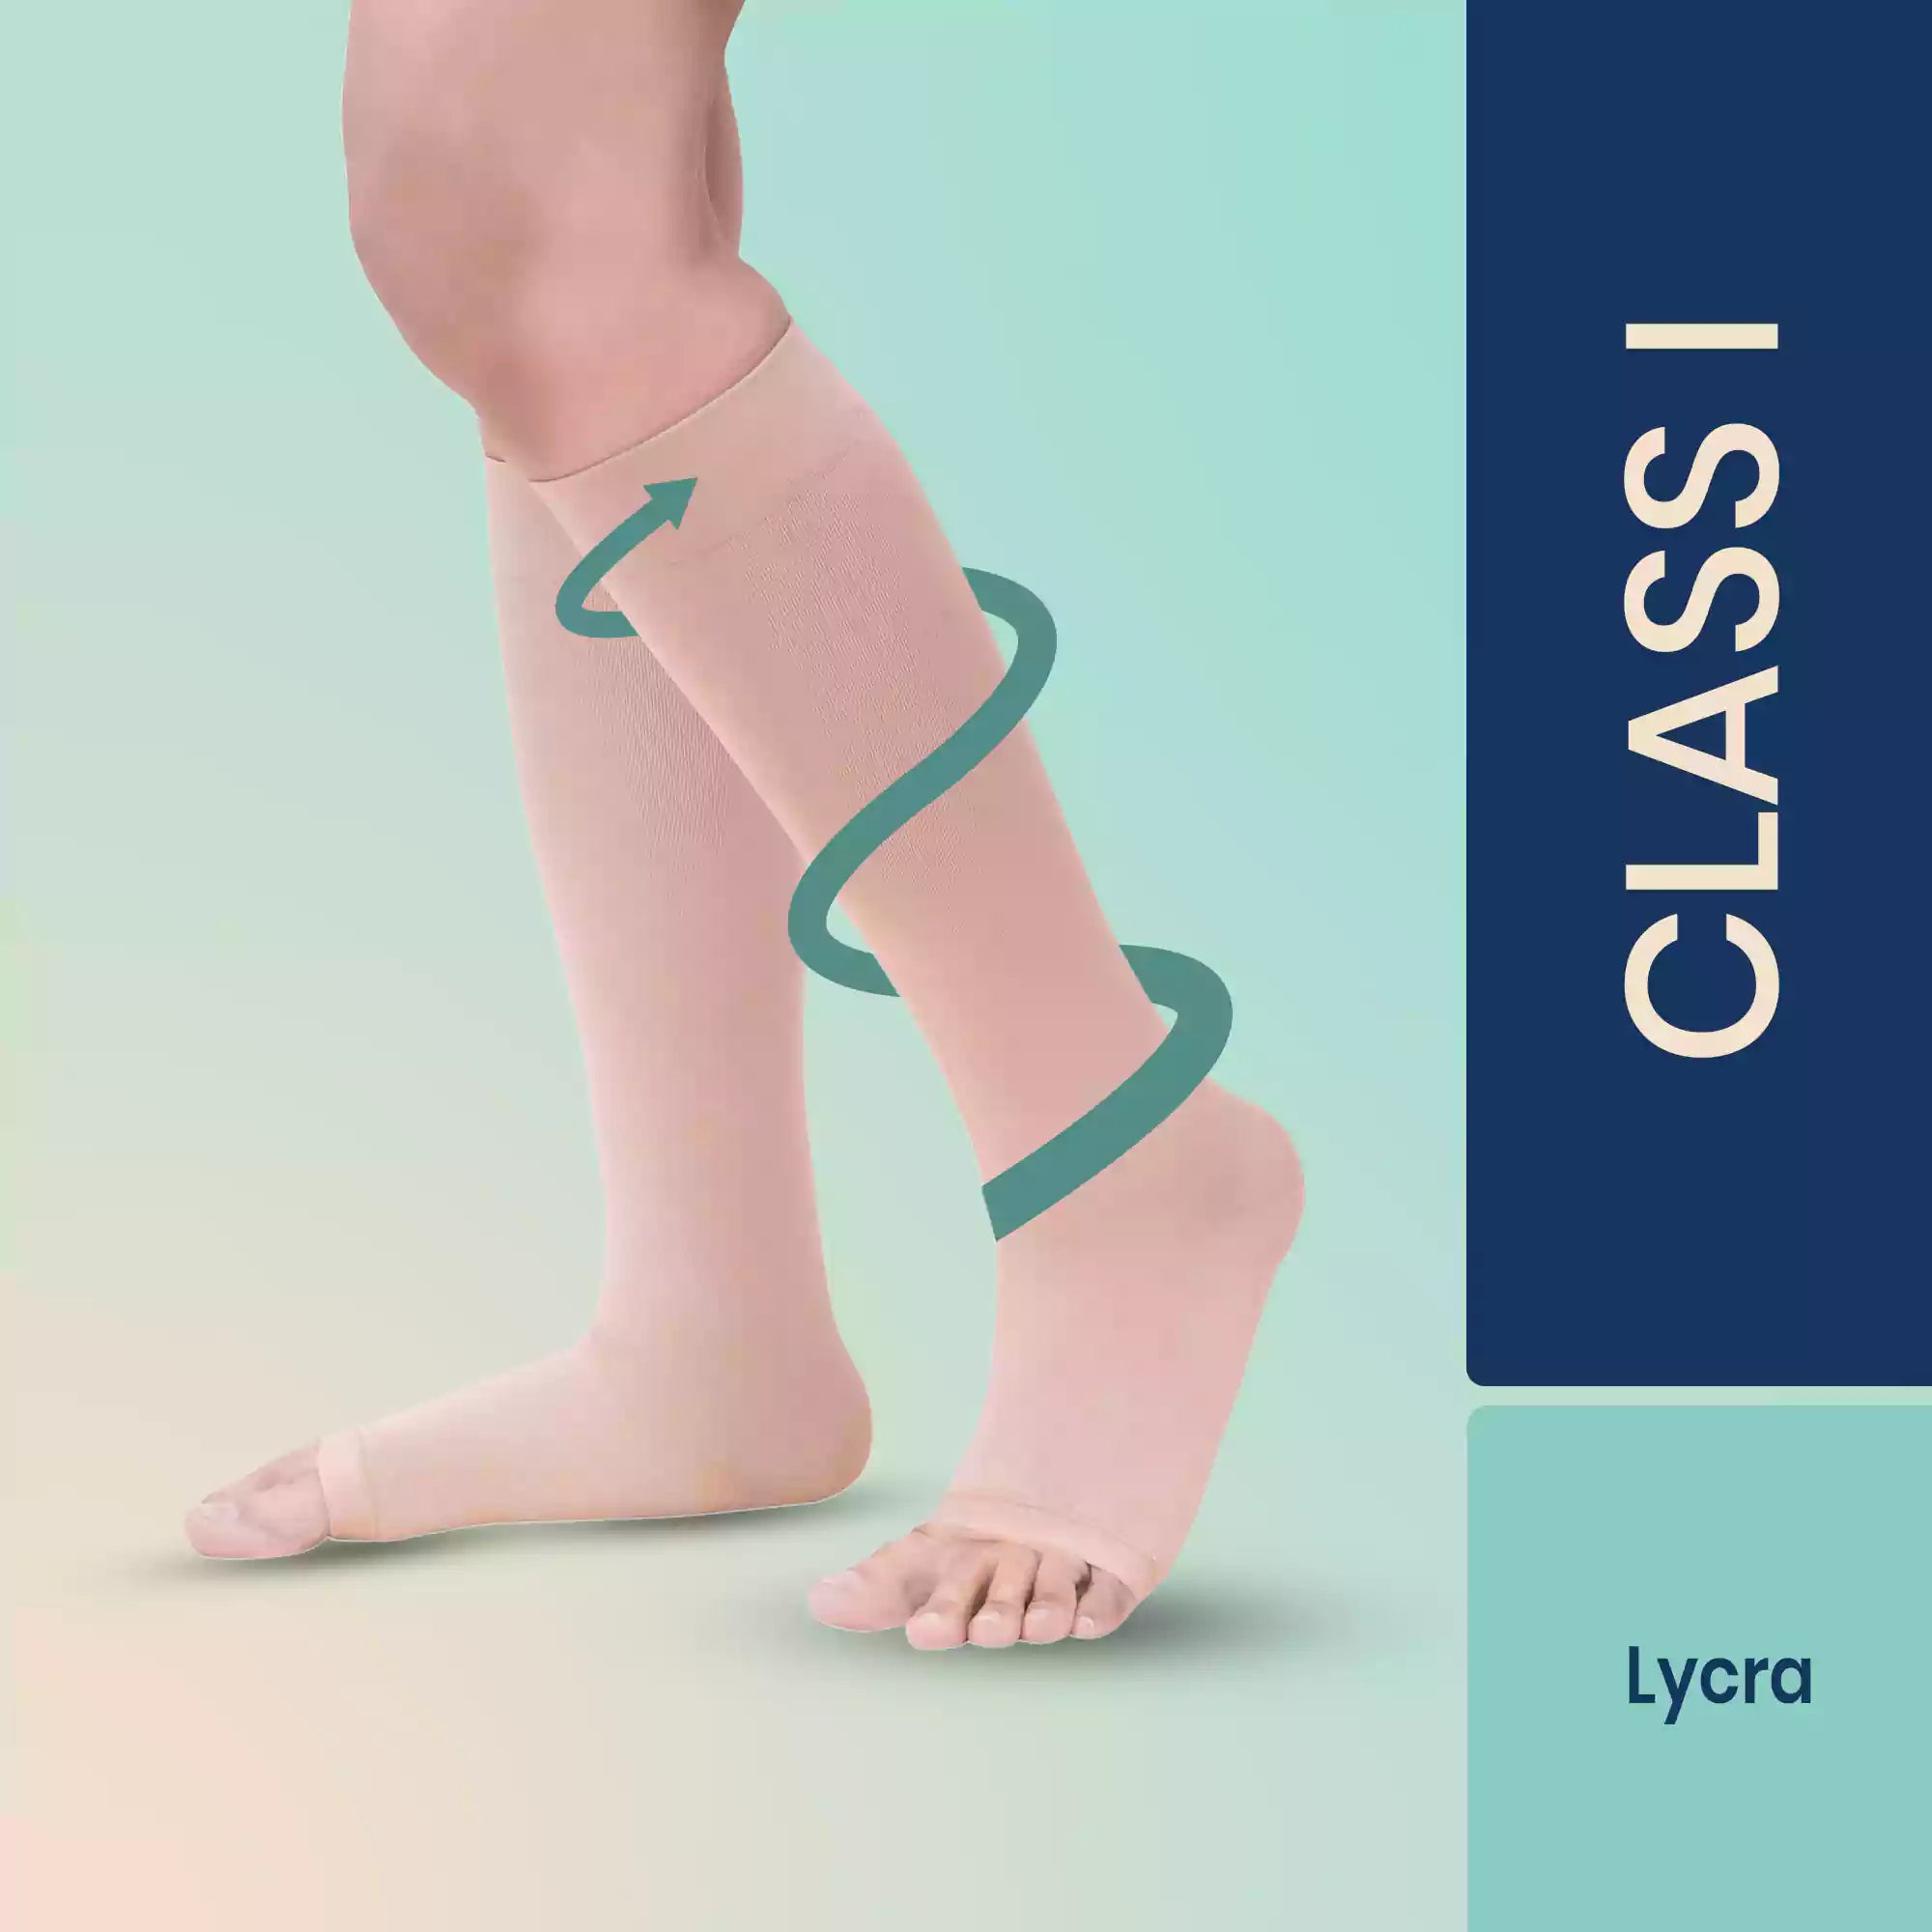 Buy Sorgen Classique Class I Compression Stockings Online –